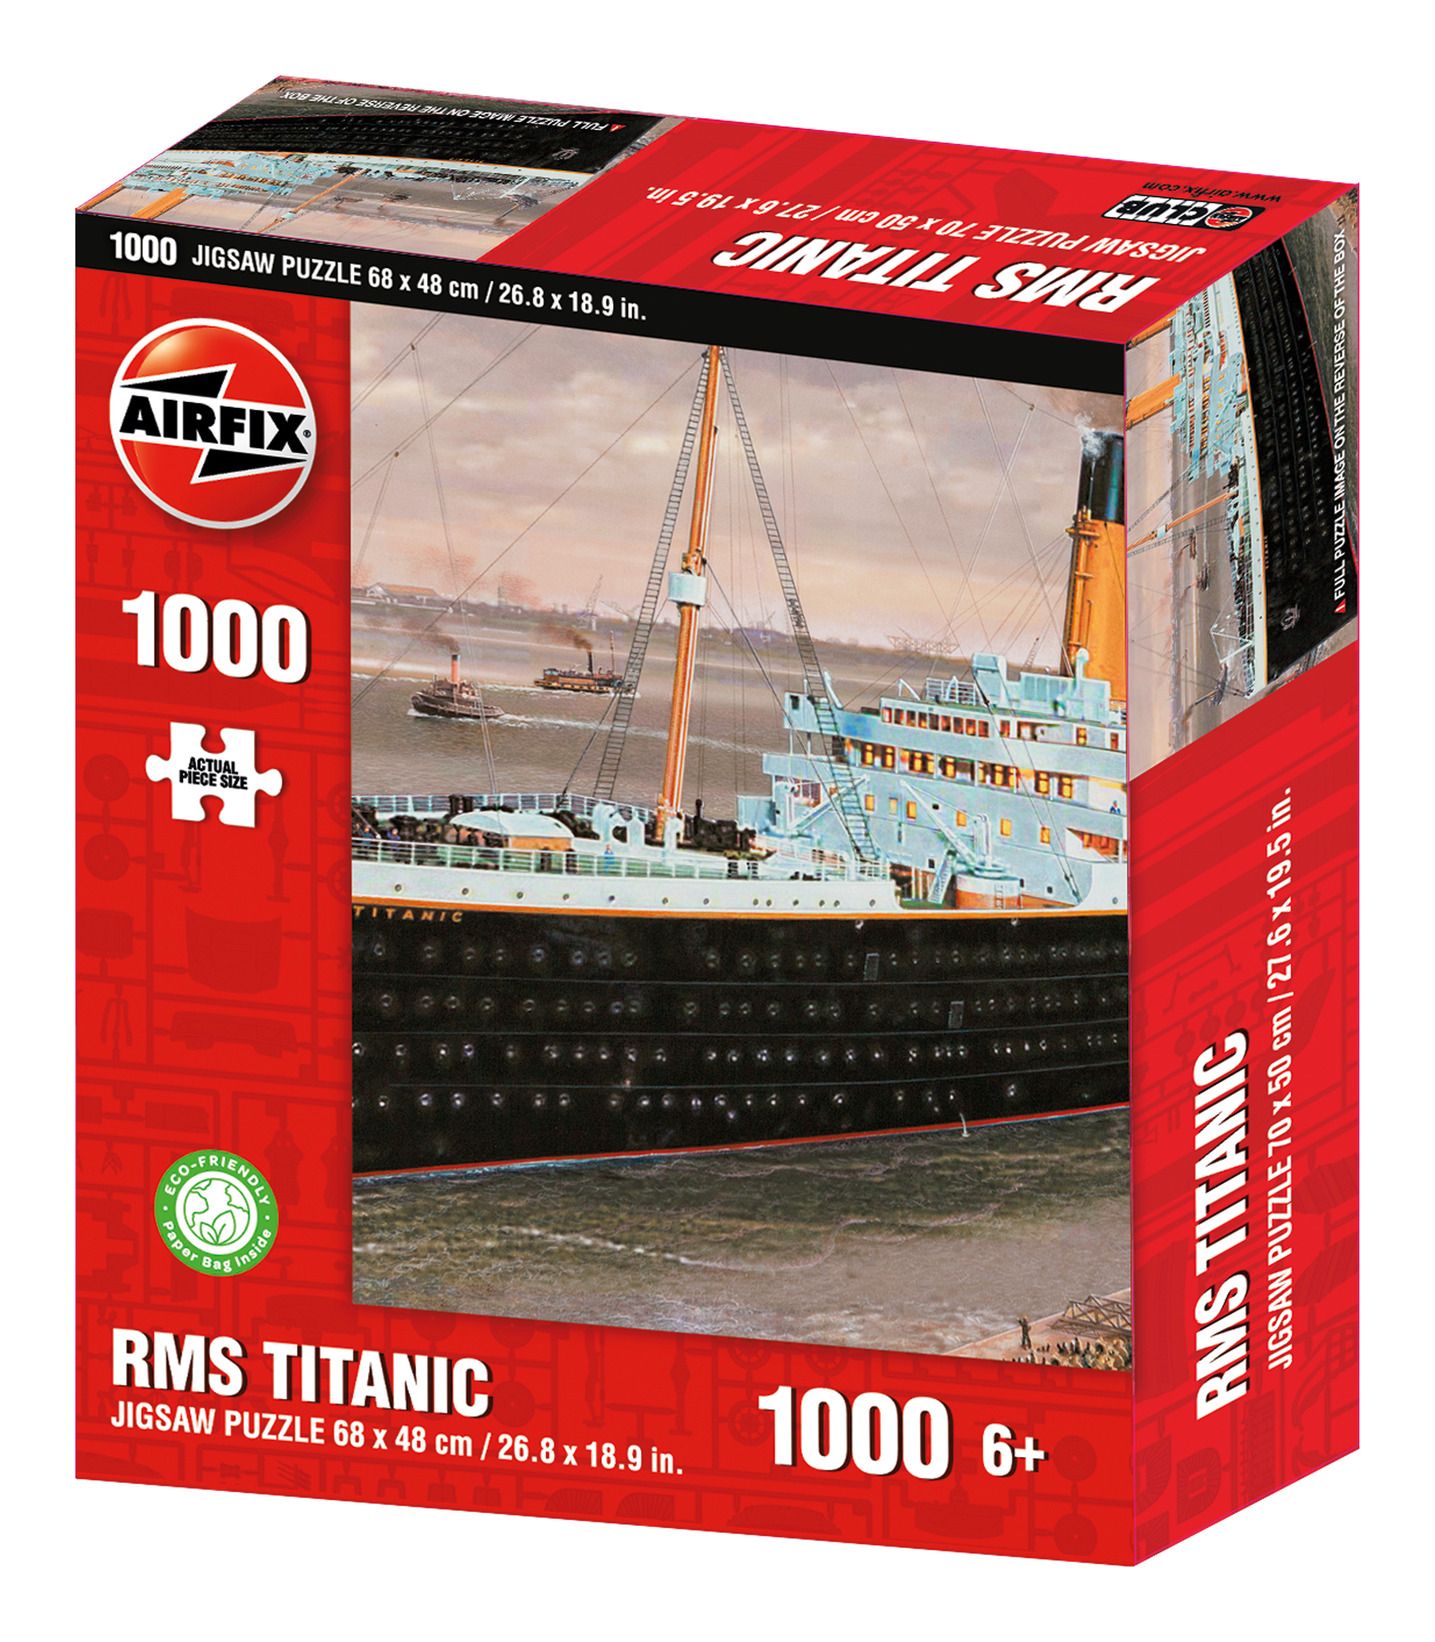 Kidicraft - Airfix HMS Titanic - 1000 Piece Jigsaw Puzzle